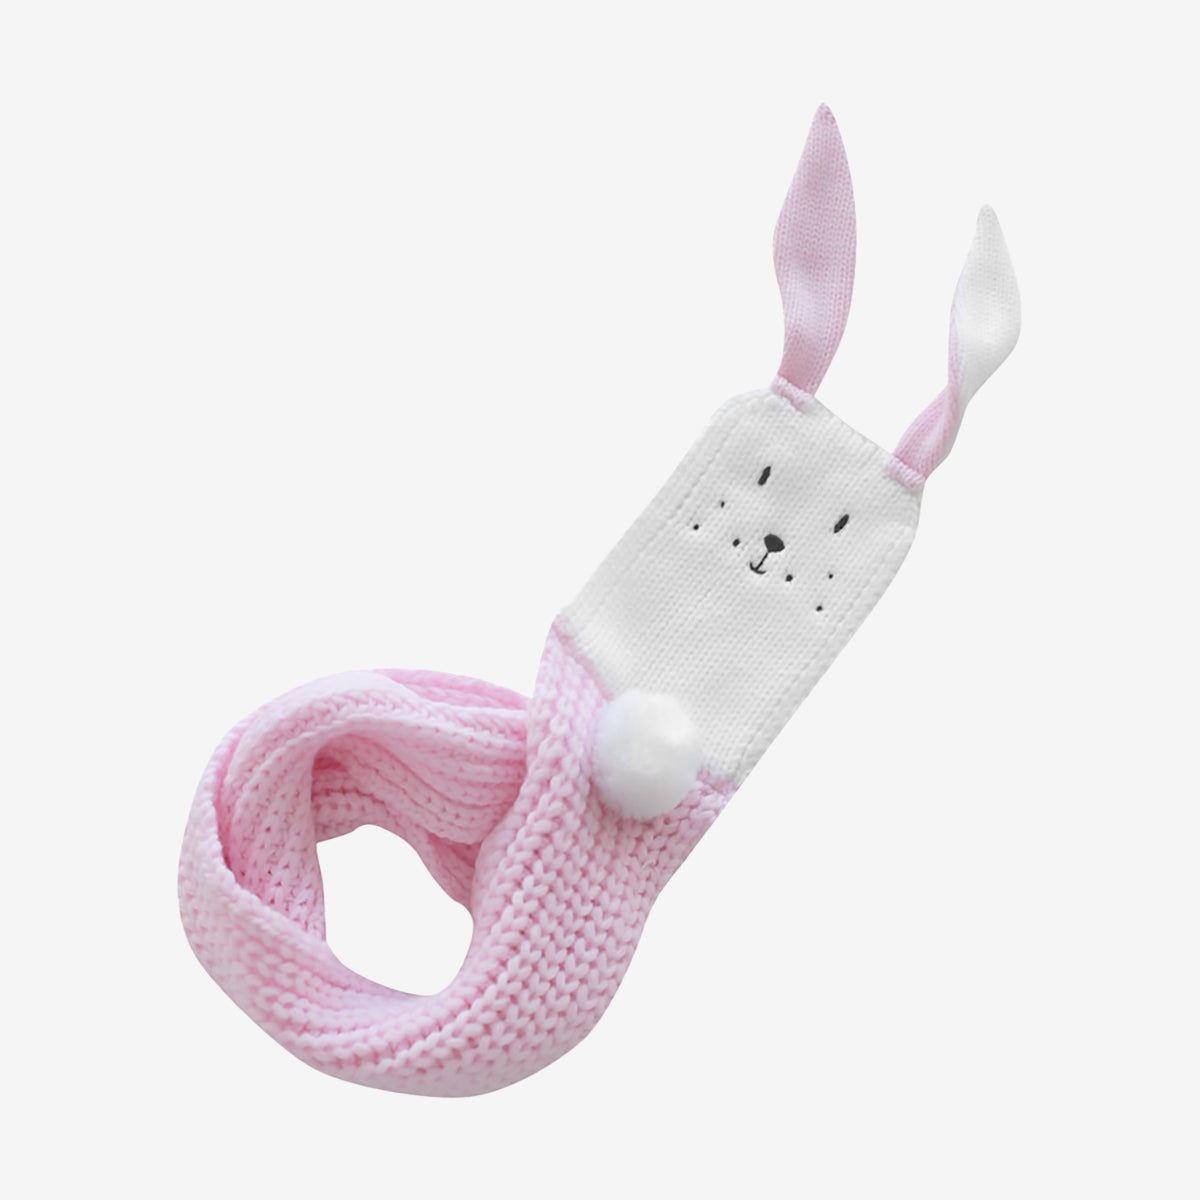 Apero Knit Kids Merino Wool Bunny Scarf - Pink